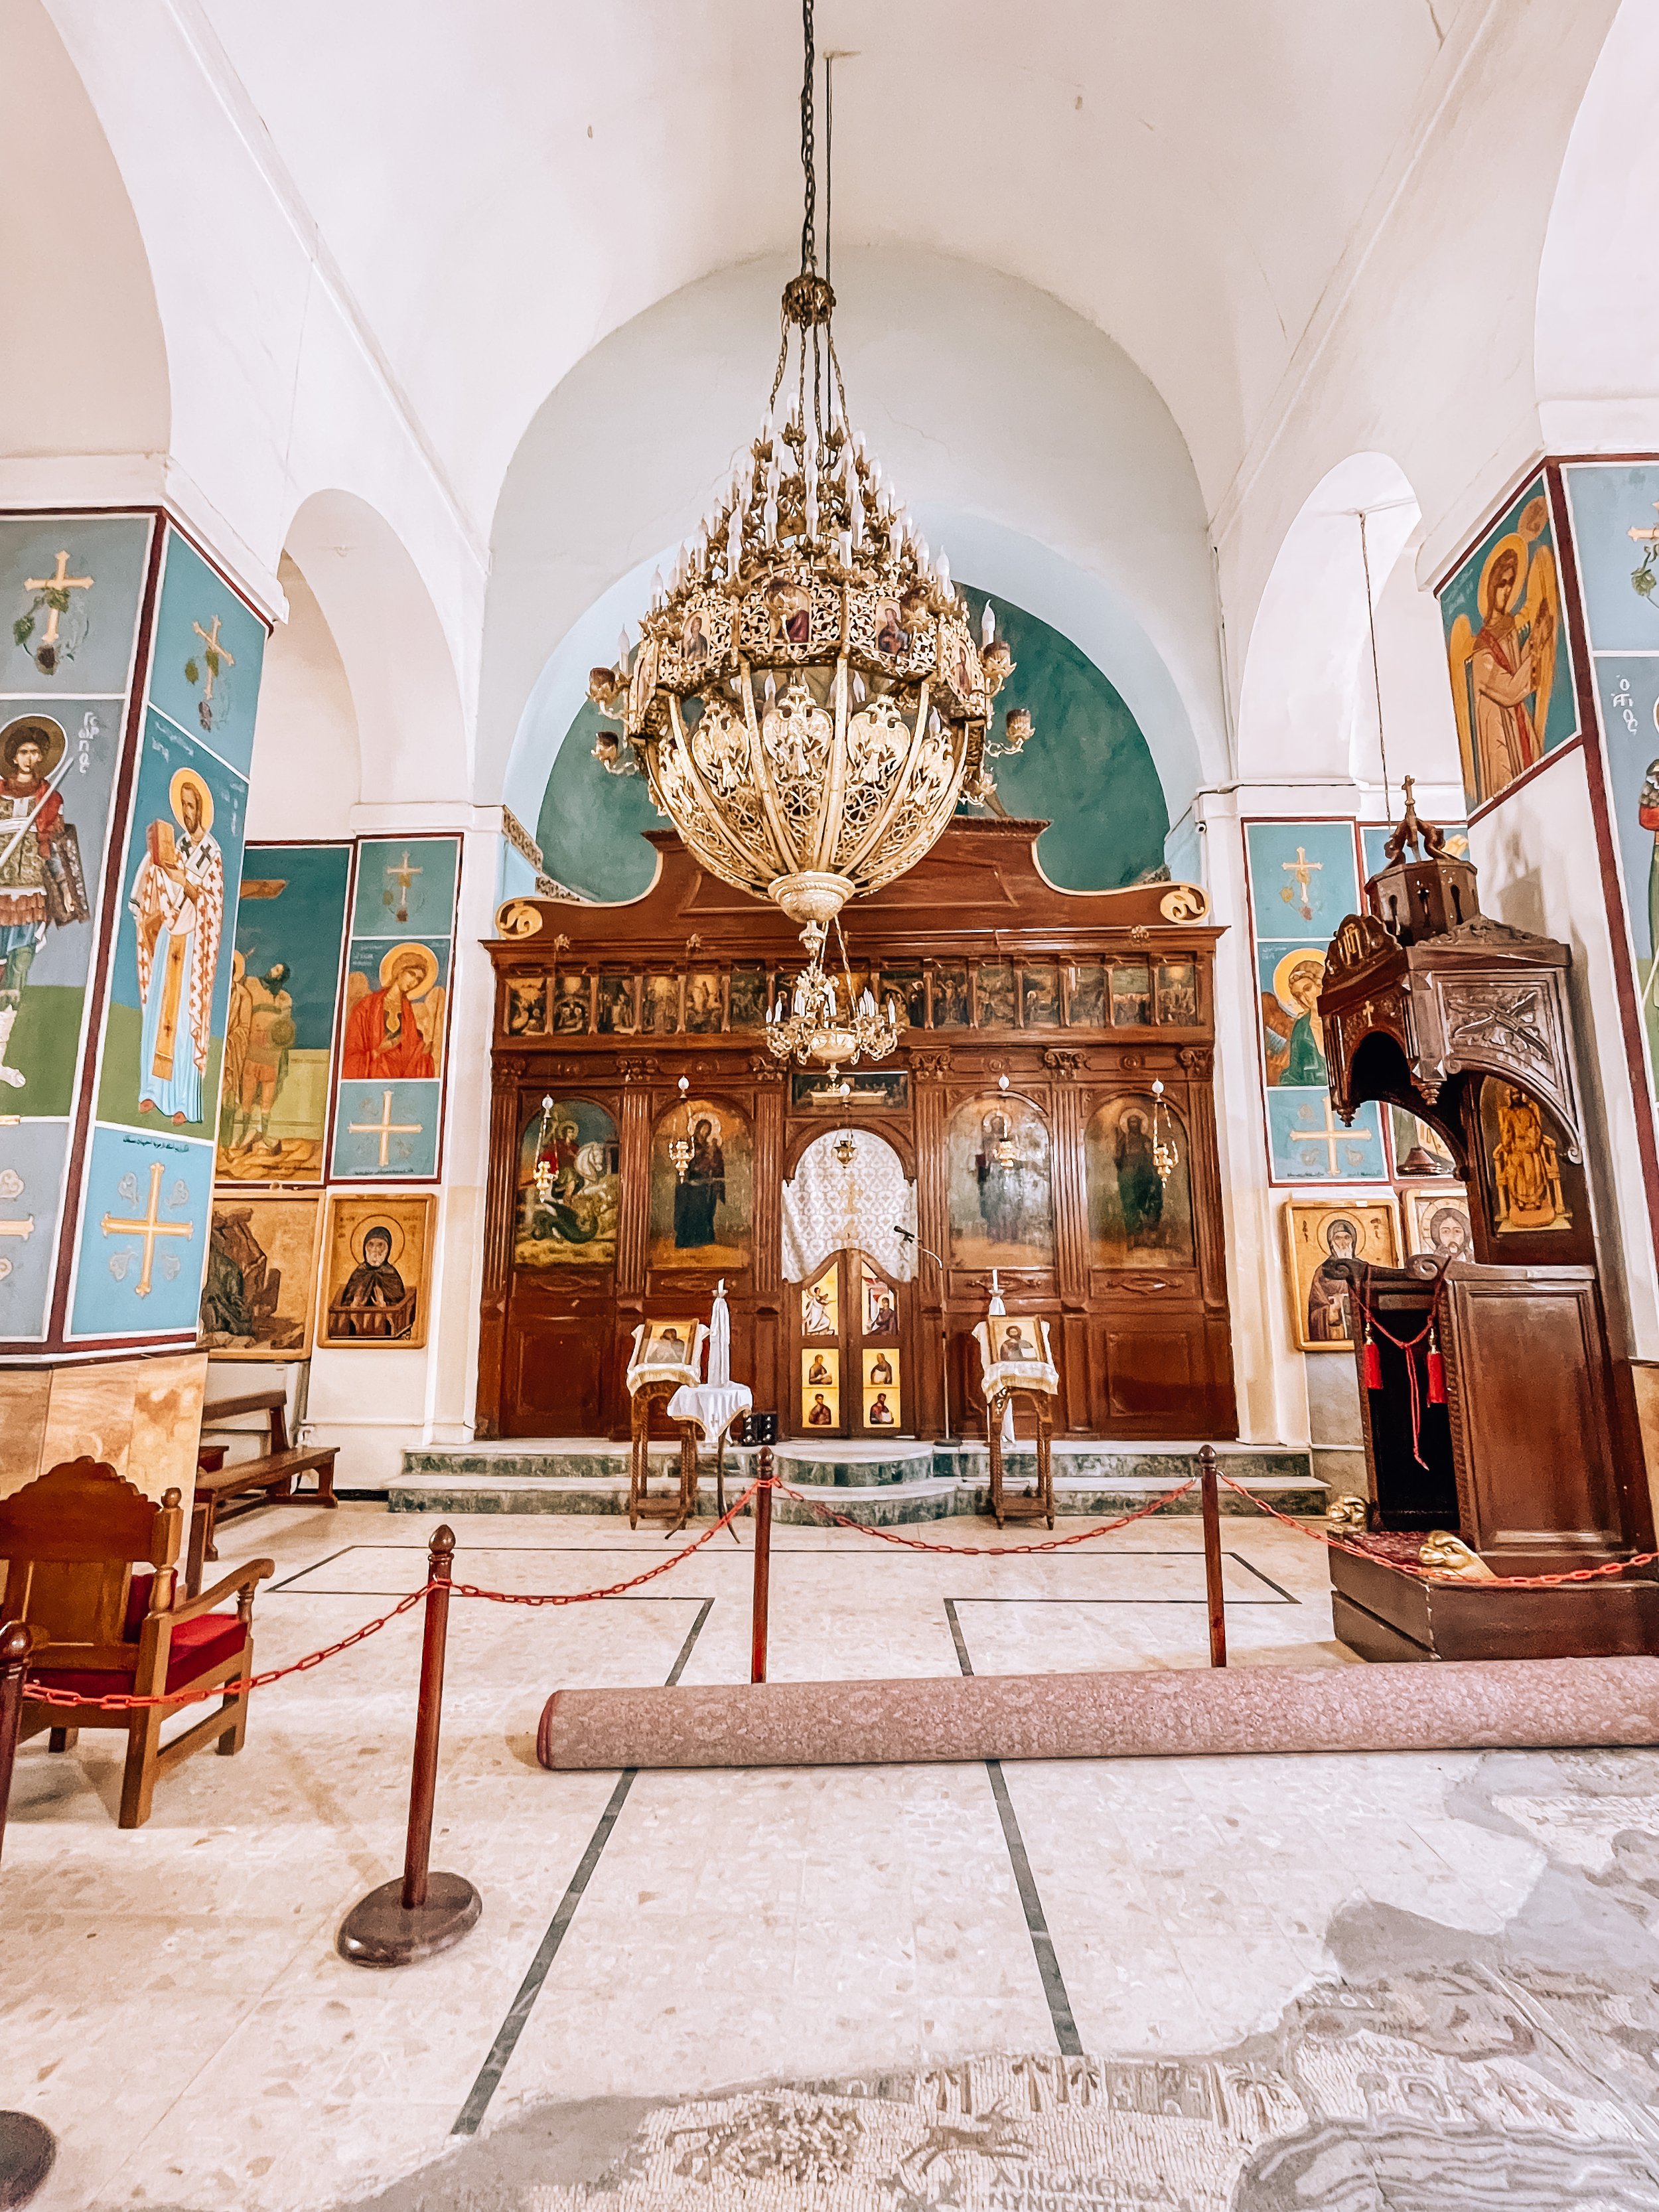 Travel Guide to Jordan - Greek Orthodox Basilica of St. George